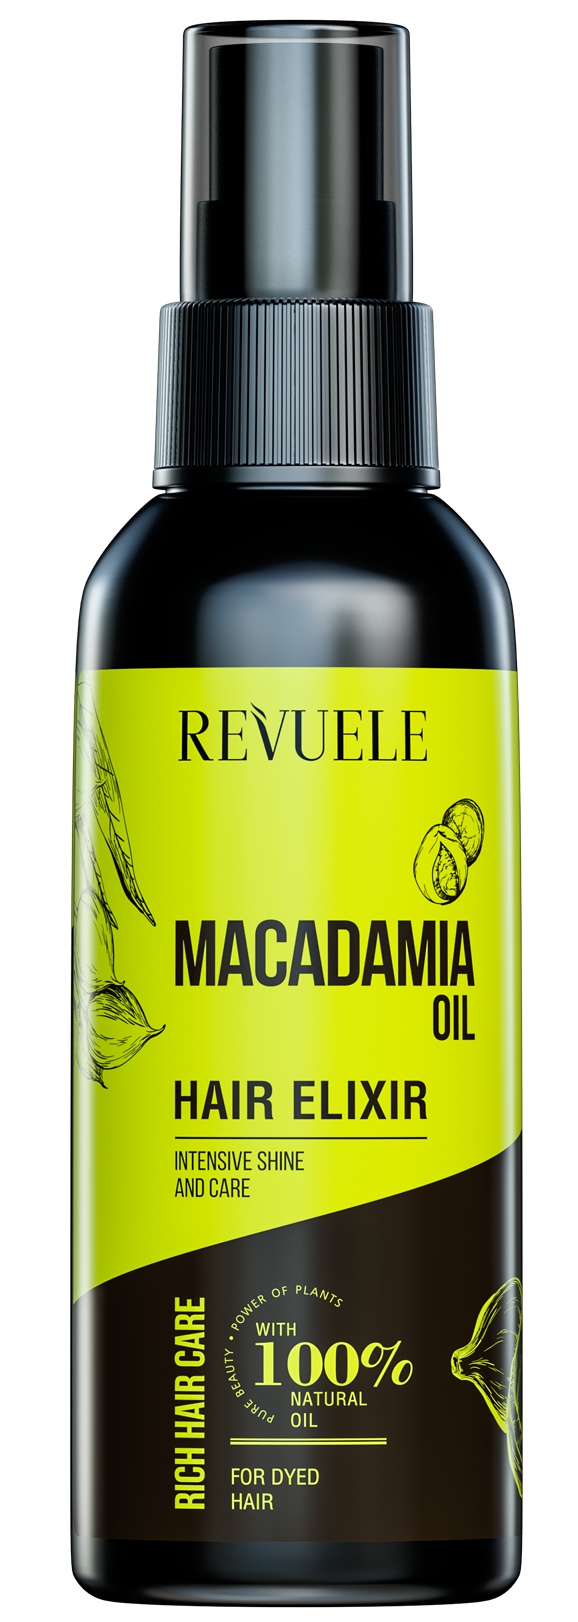 Revuele Macadamia Oil Hair Elixir